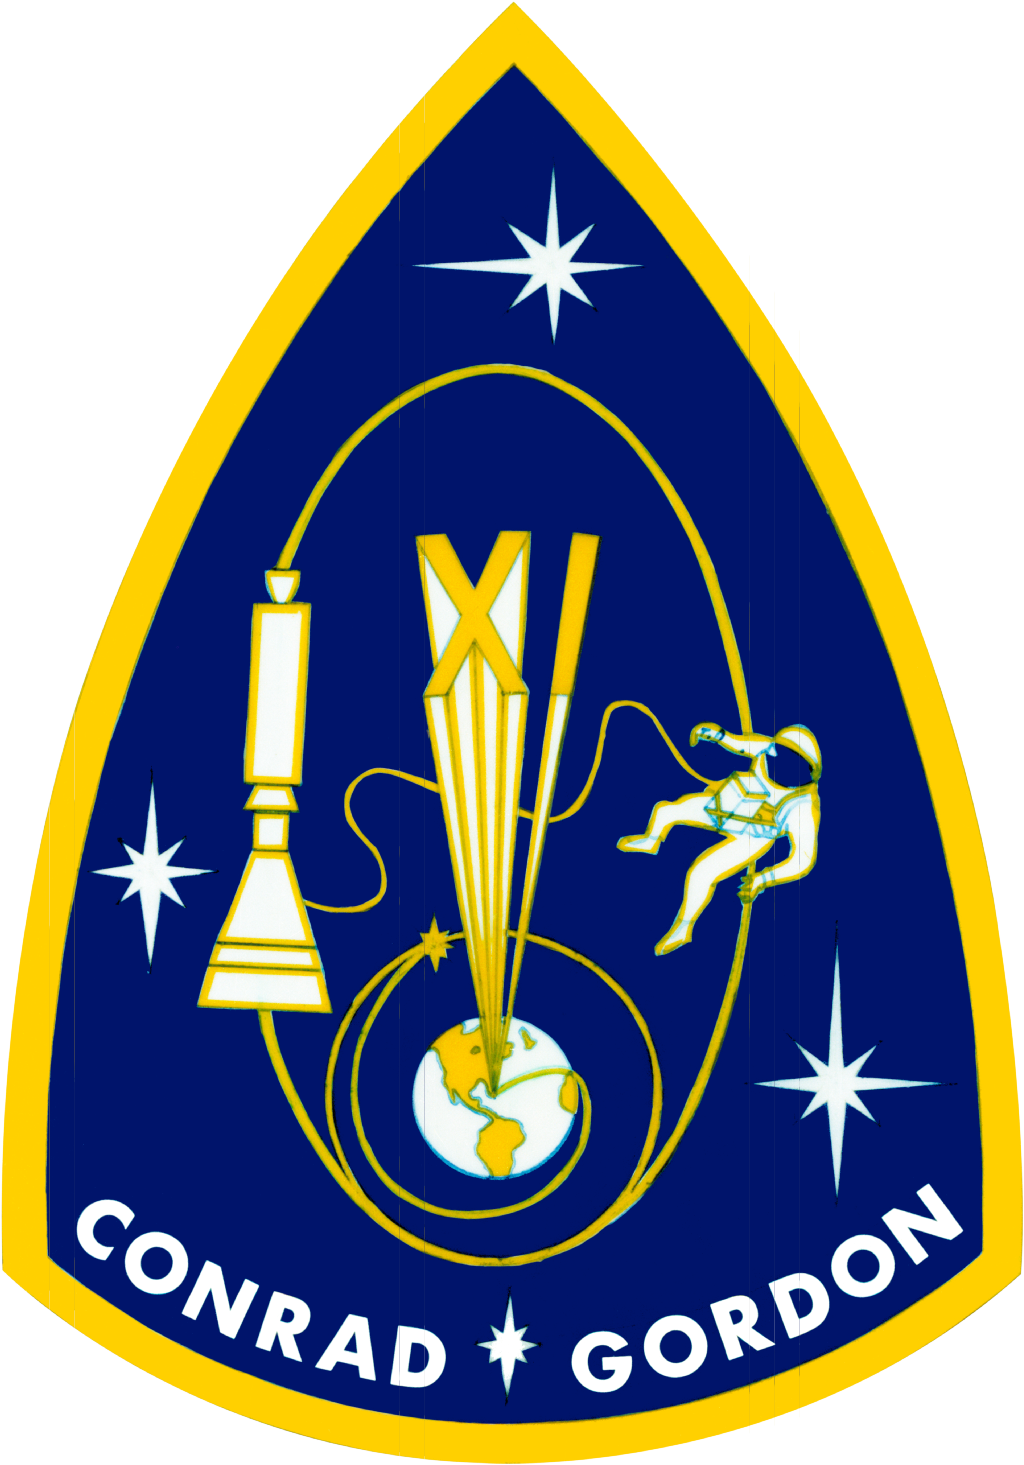 Mission patch for Gemini XI (Gemini 11)